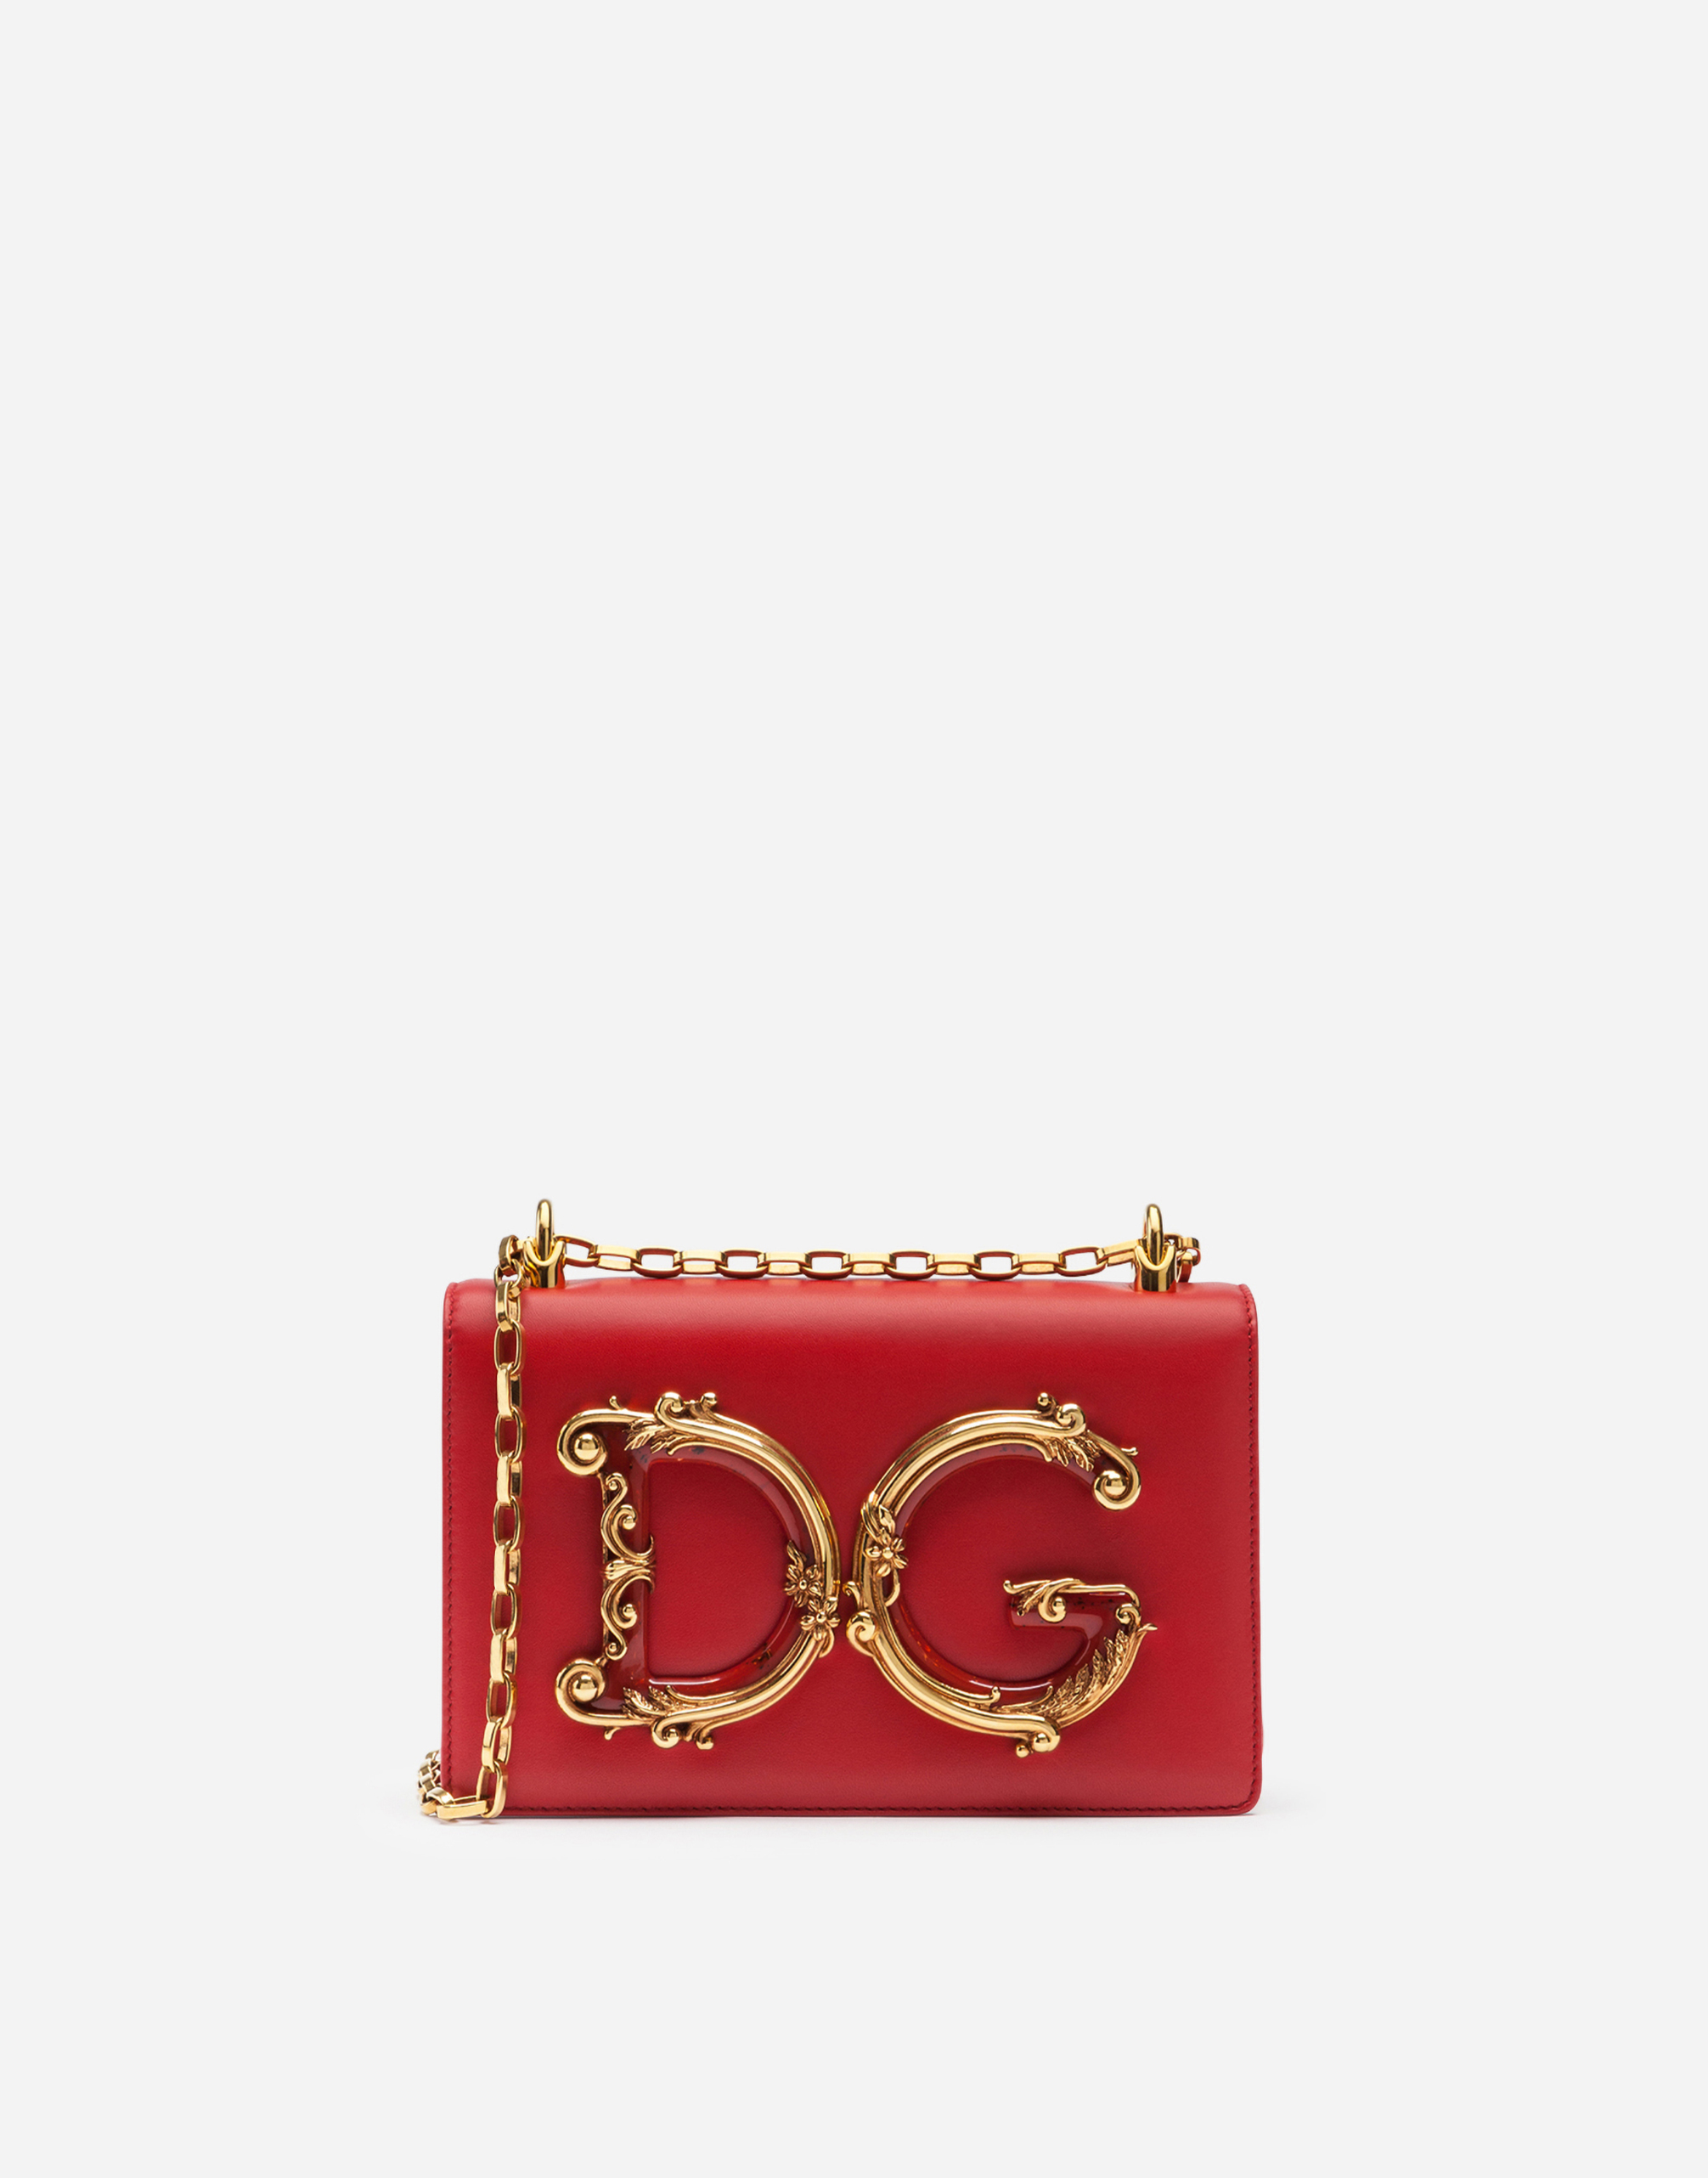 DG Girls shoulder bag in nappa leather in Red